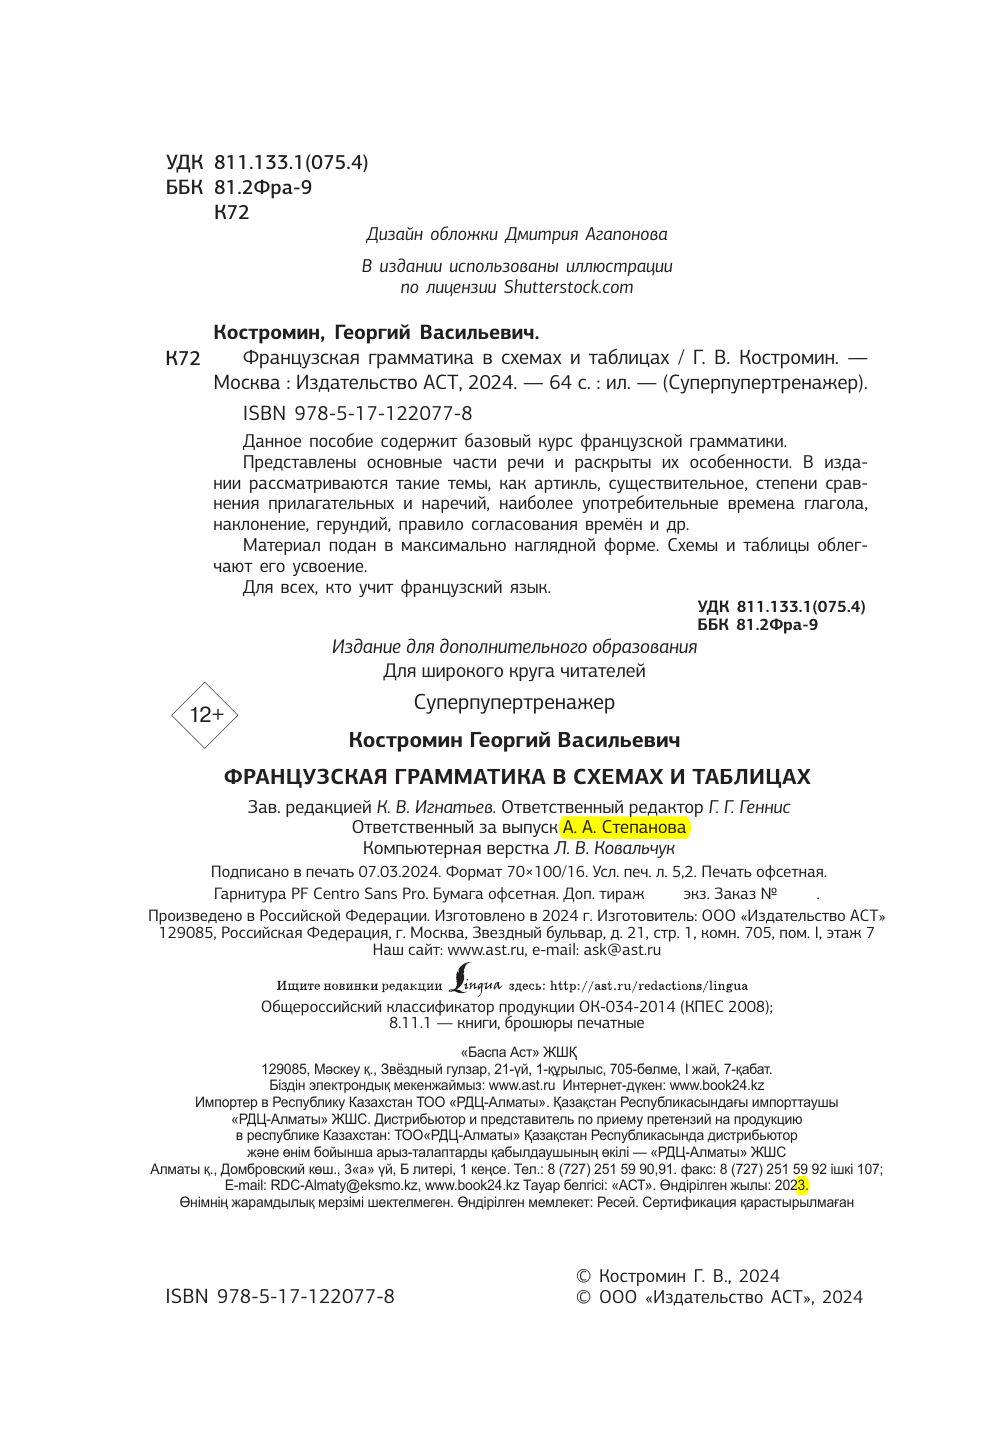 Костромин Георгий Васильевич Французская грамматика в схемах и таблицах - страница 3